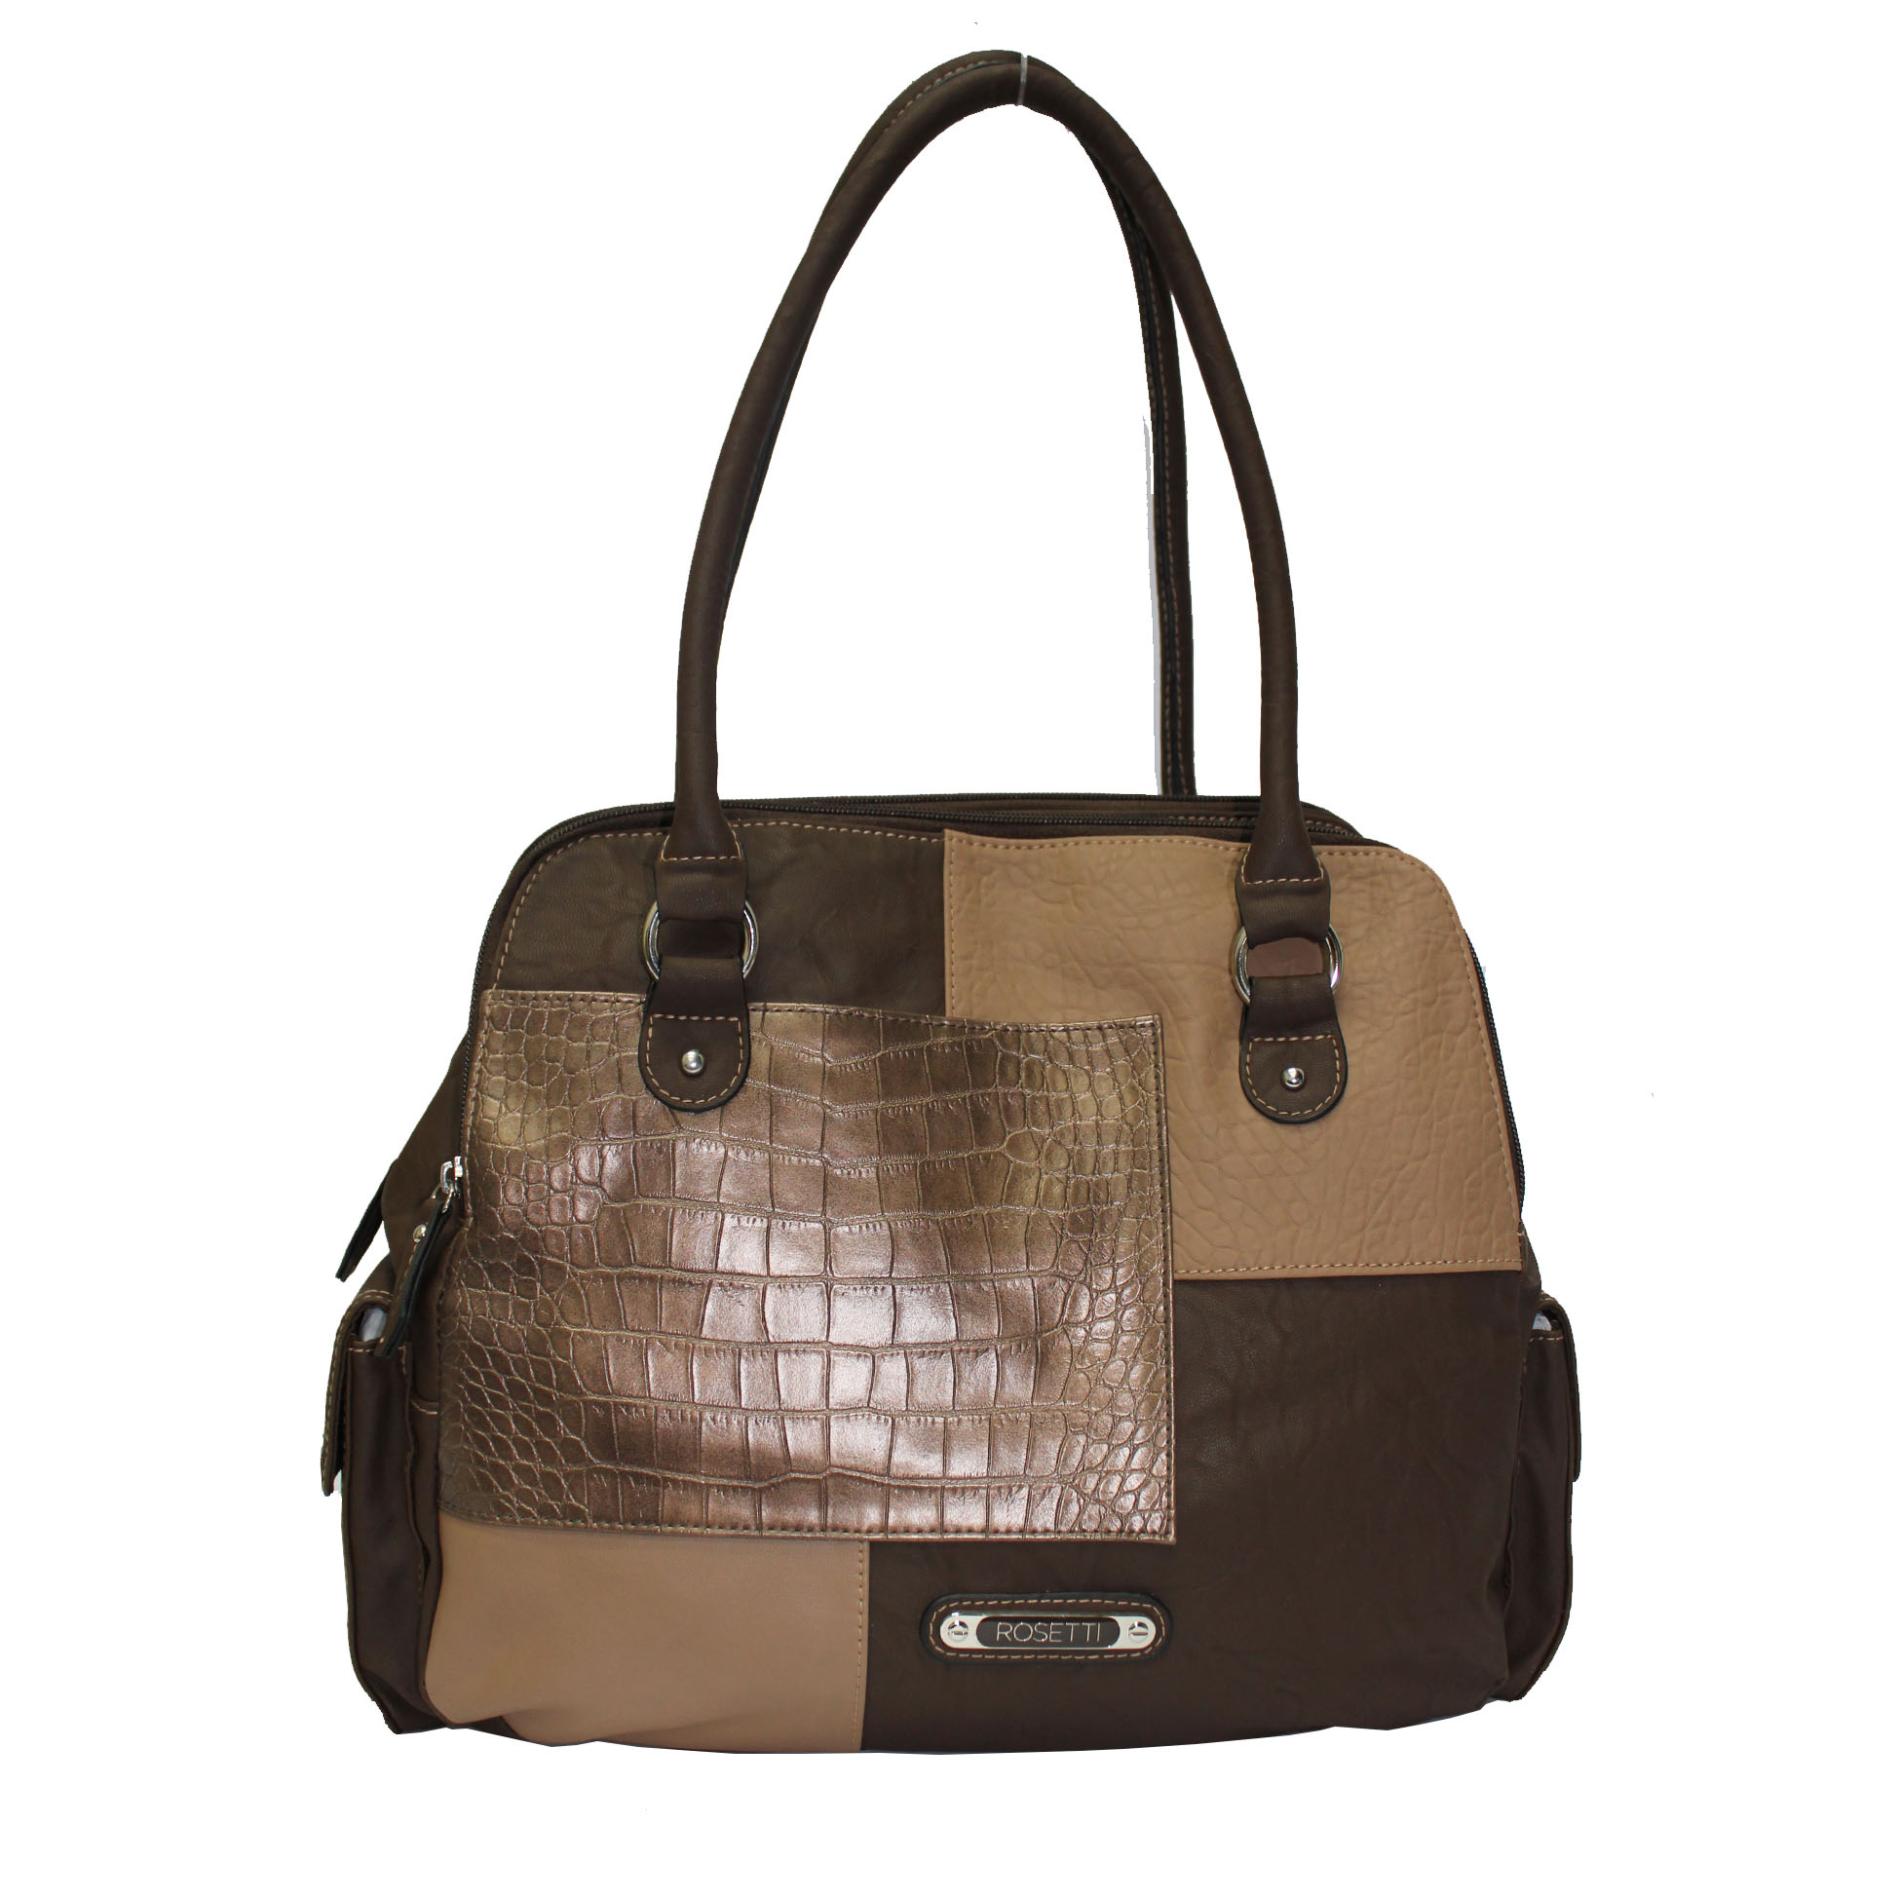 Rosetti Women's Patchwork Handbag